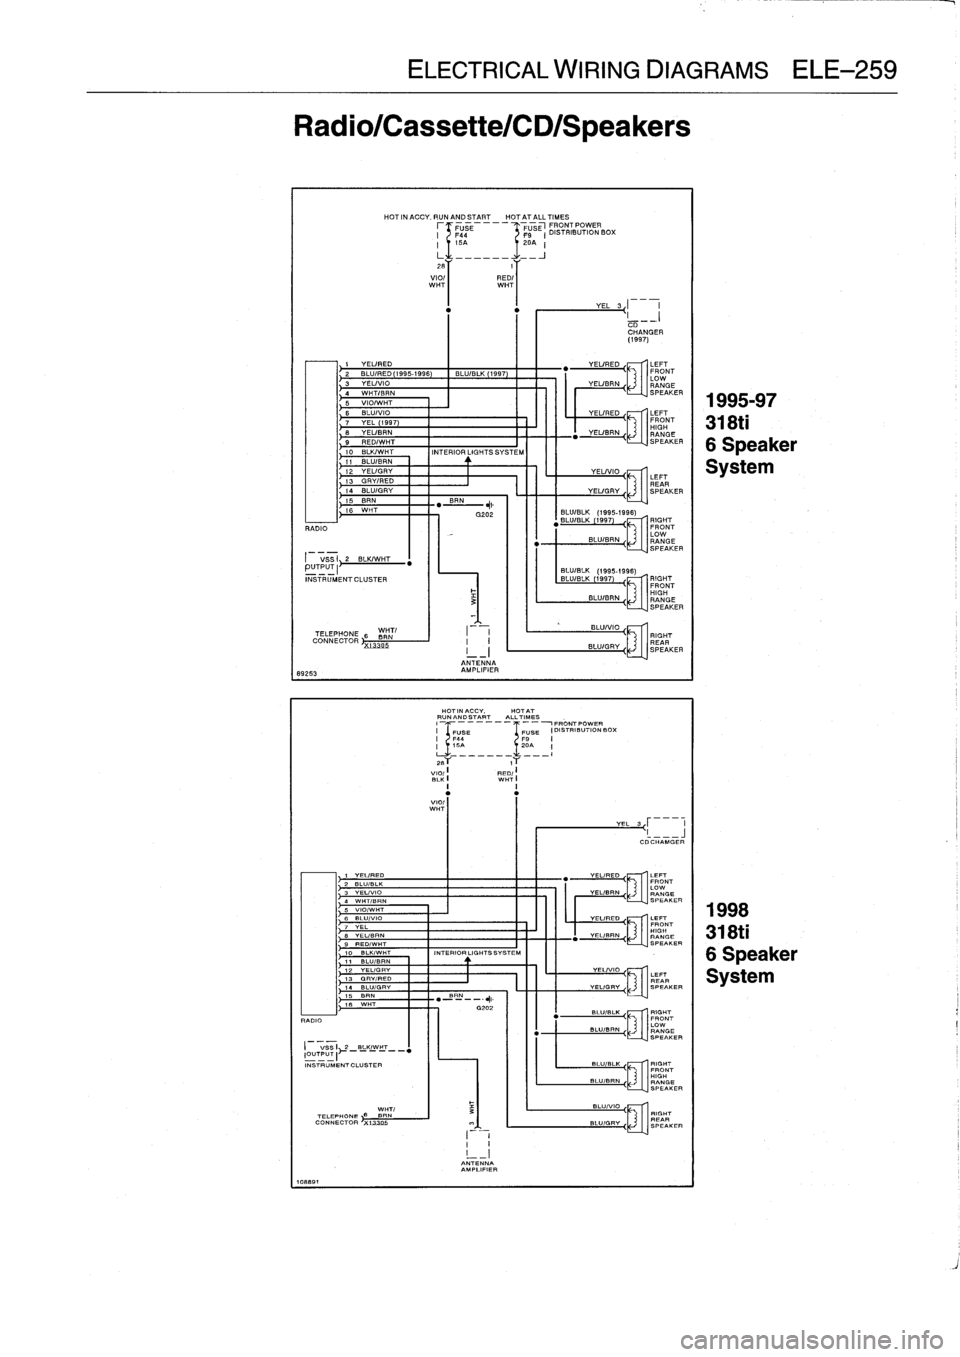 BMW 328i 1994 E36 Workshop Manual 
ELECTRICAL
WIRING
DIAGRAMS
ELE-259

Radio/Cassette/CD/Speakers

RADIO

I
VSSI
2
BLK/WHT
pUTPUTI~~
INSTRUMENT
CLUSTER

89253
RADIO

I

	

V
SS
I
r
2
-
B-K-W-7
~
1=UUTPU-I
INSTRUMENTCLUSTER

1-891

1
0